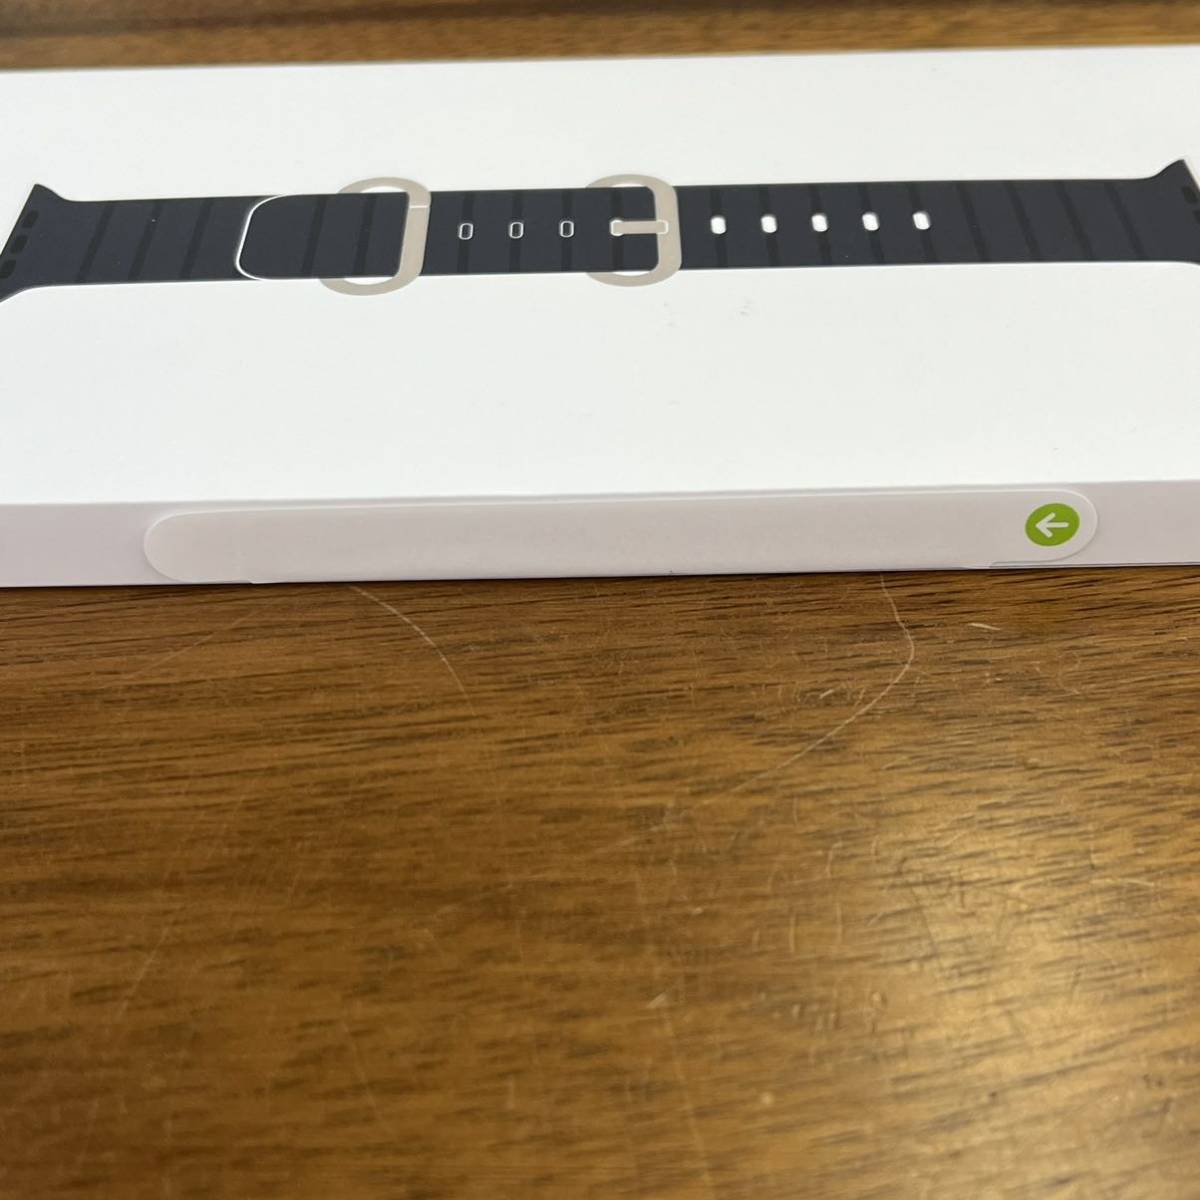 [*TK0319] нераспечатанный товар Apple Watch Apple часы chitanimu сумка ru& регулируемый петля midnight Ocean частота 49MM 1 иен ~